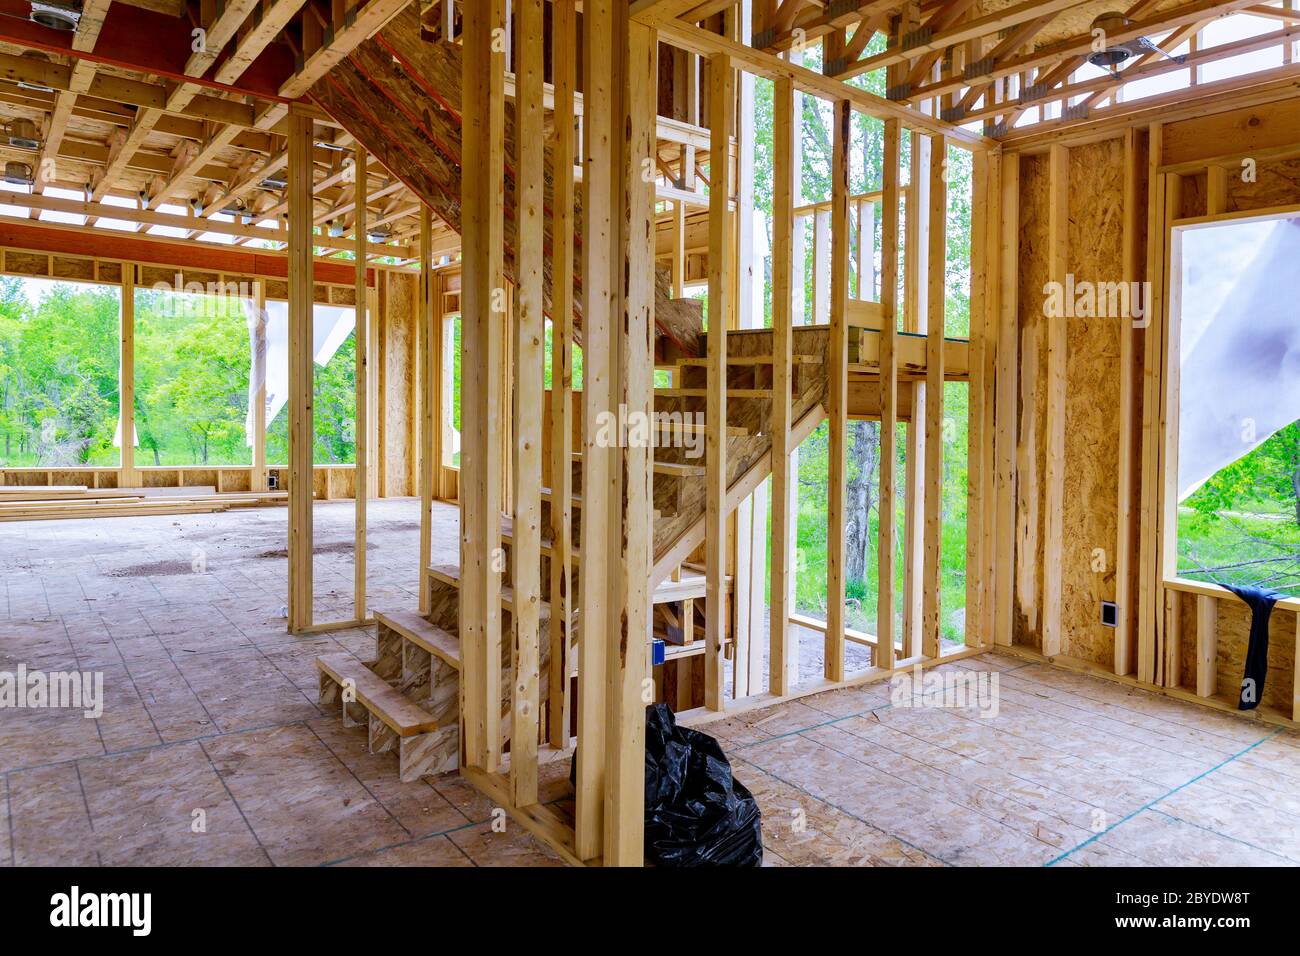 Casa de vigas de madera construcción casa marco interior residencial casa Foto de stock